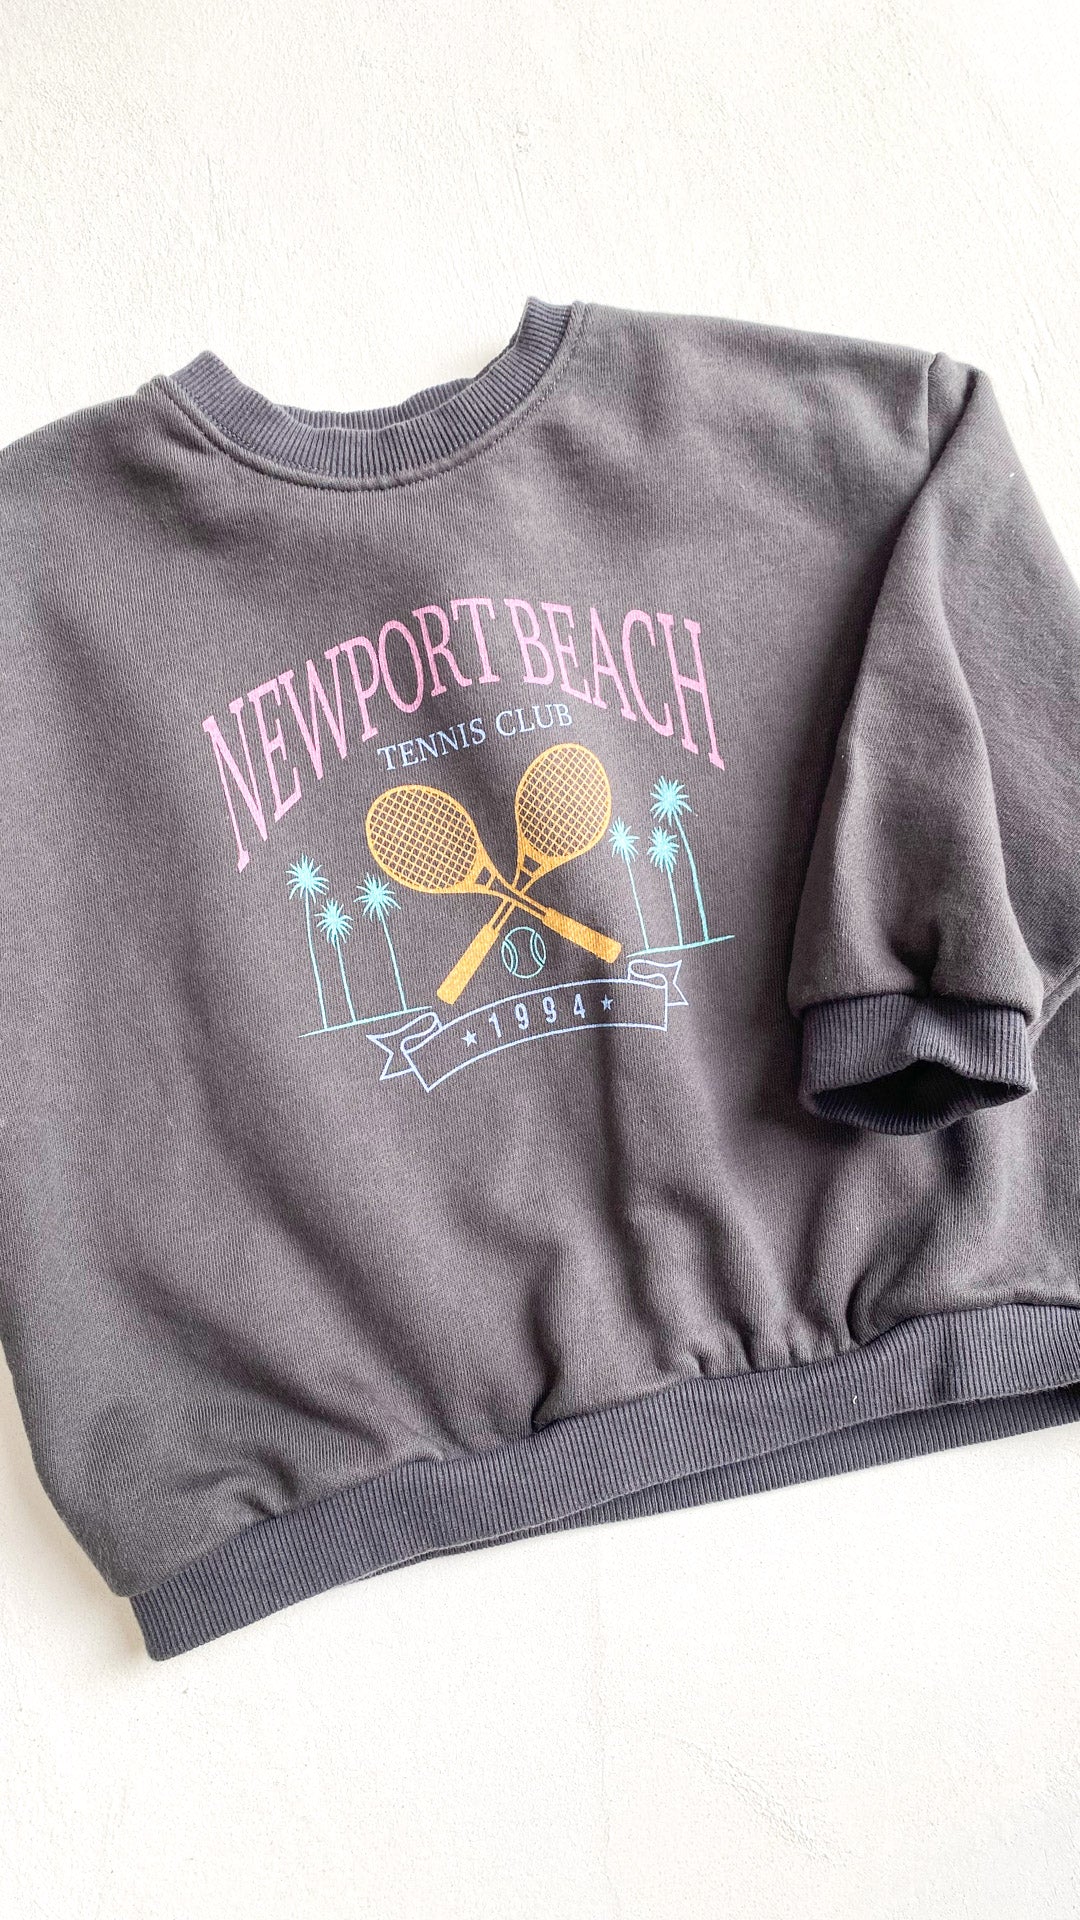 Tennis sweater